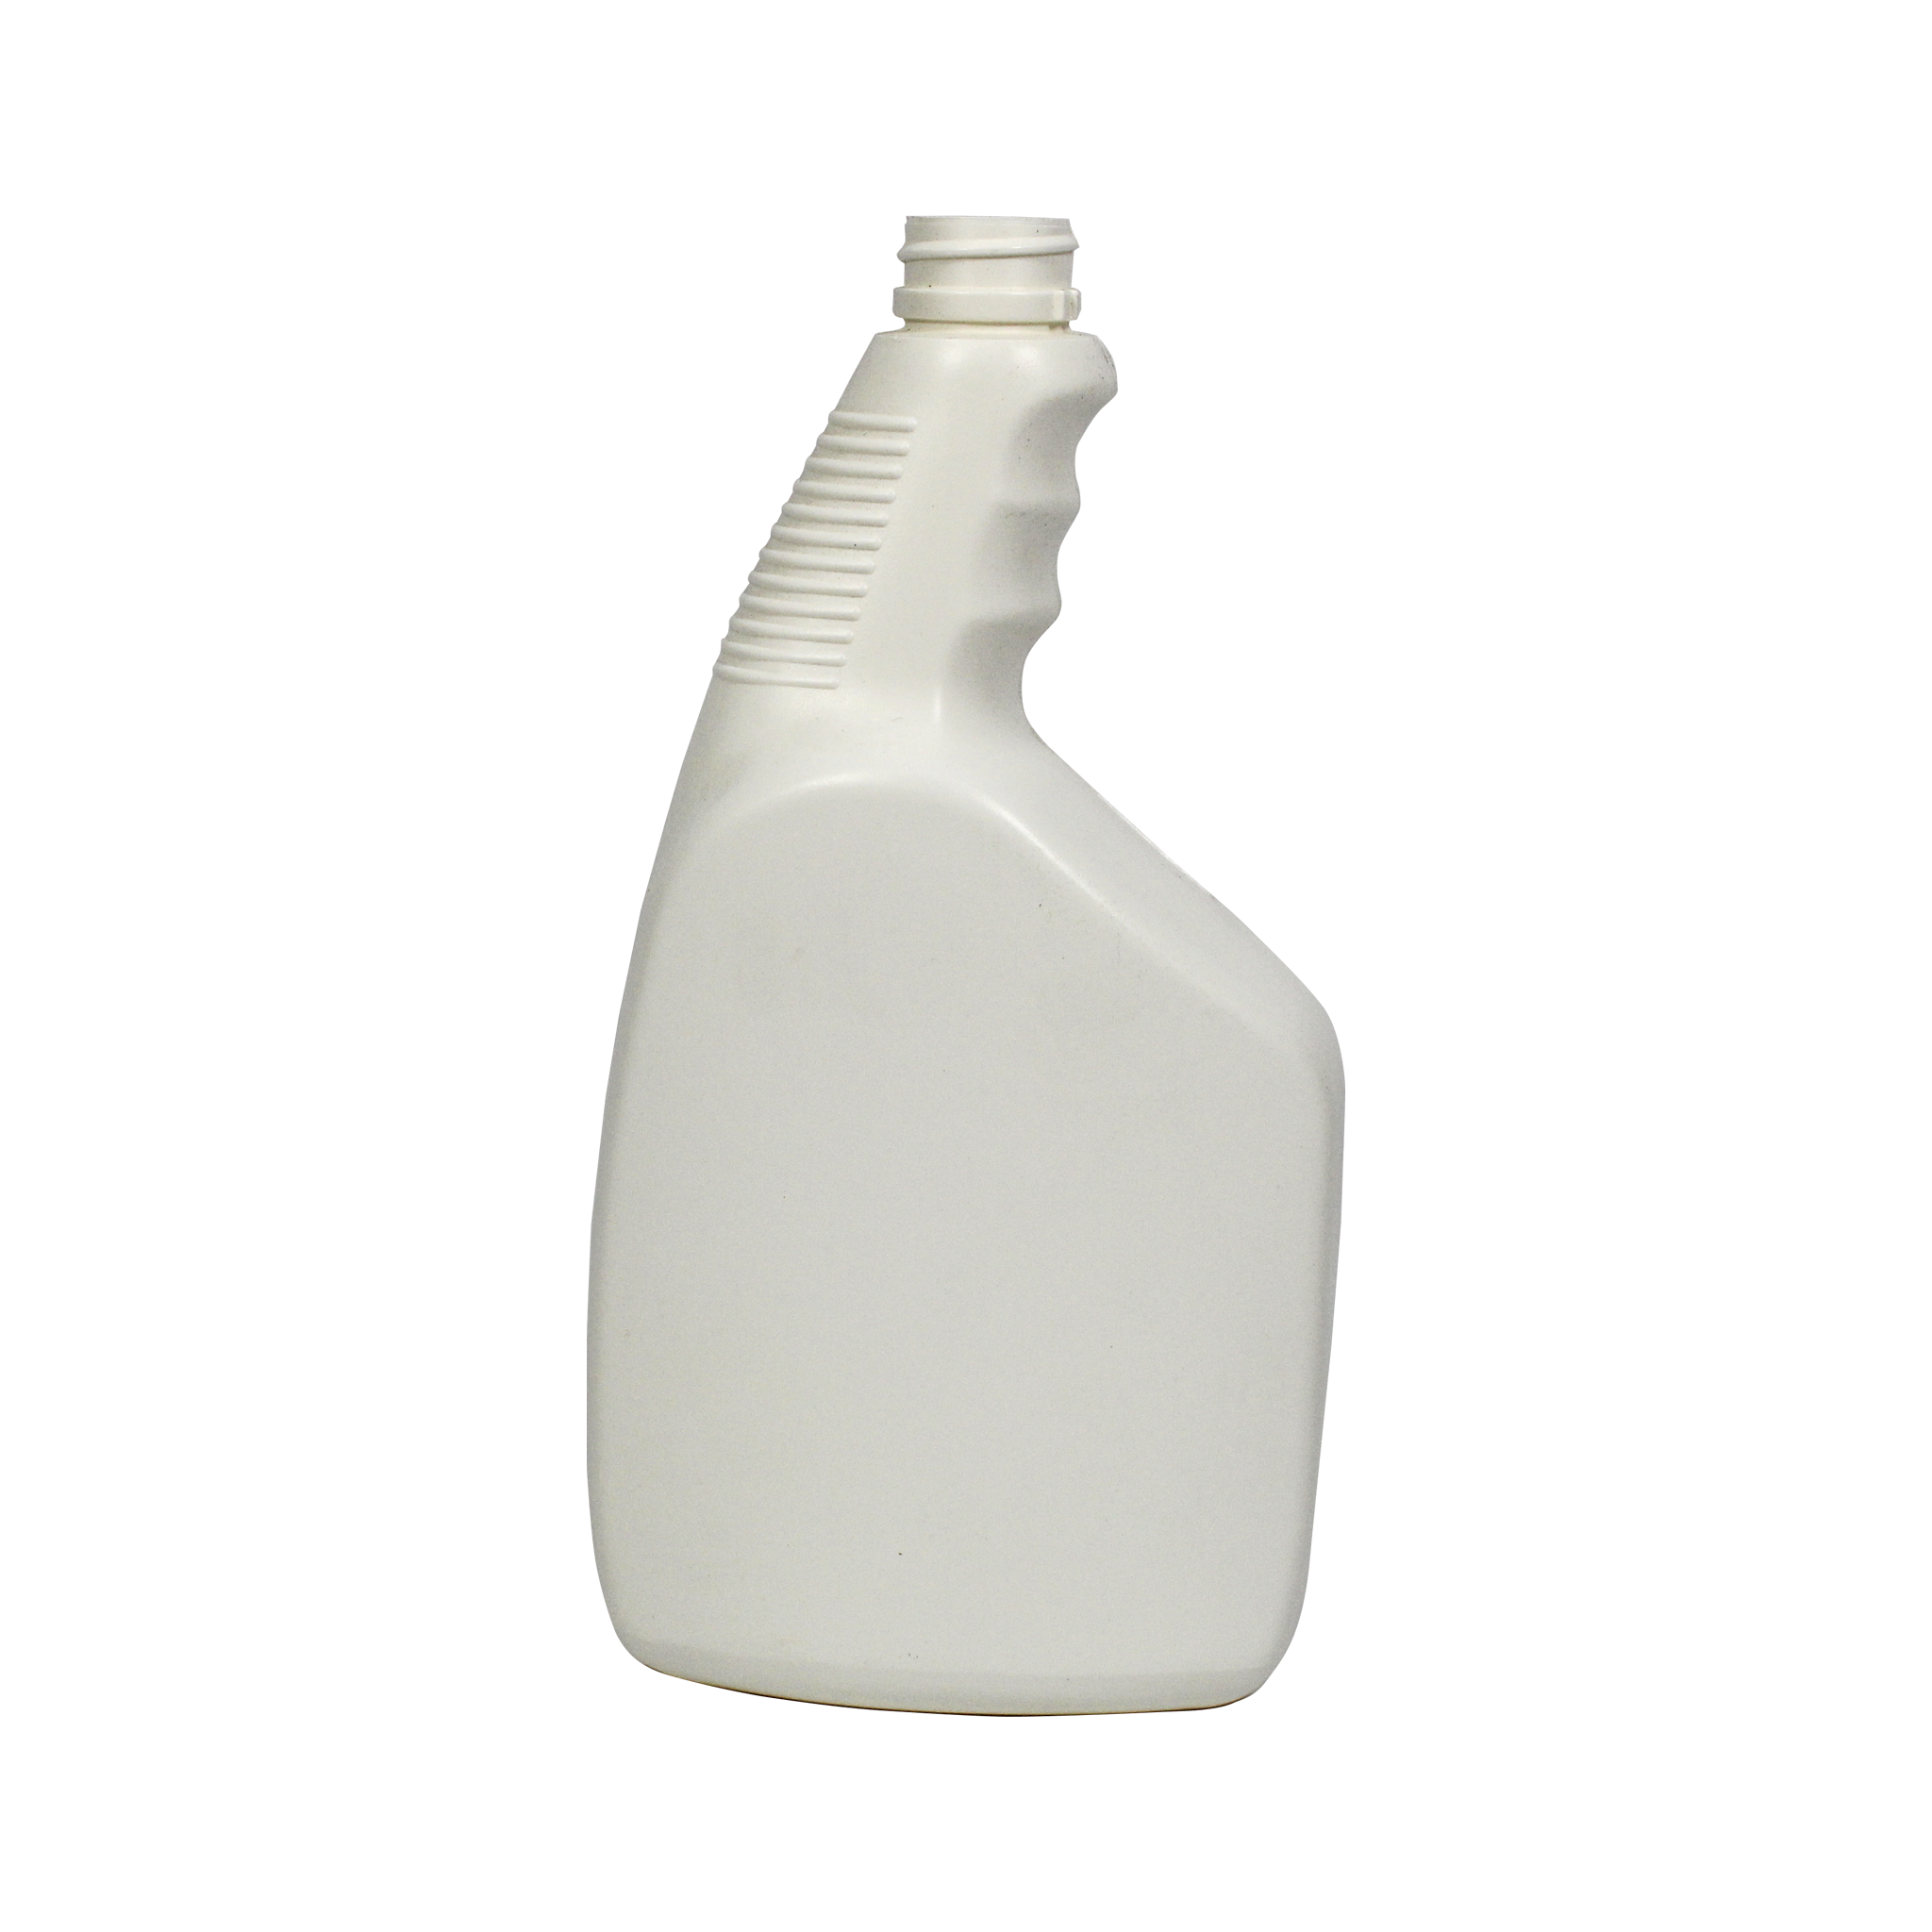 32oz White Bottle